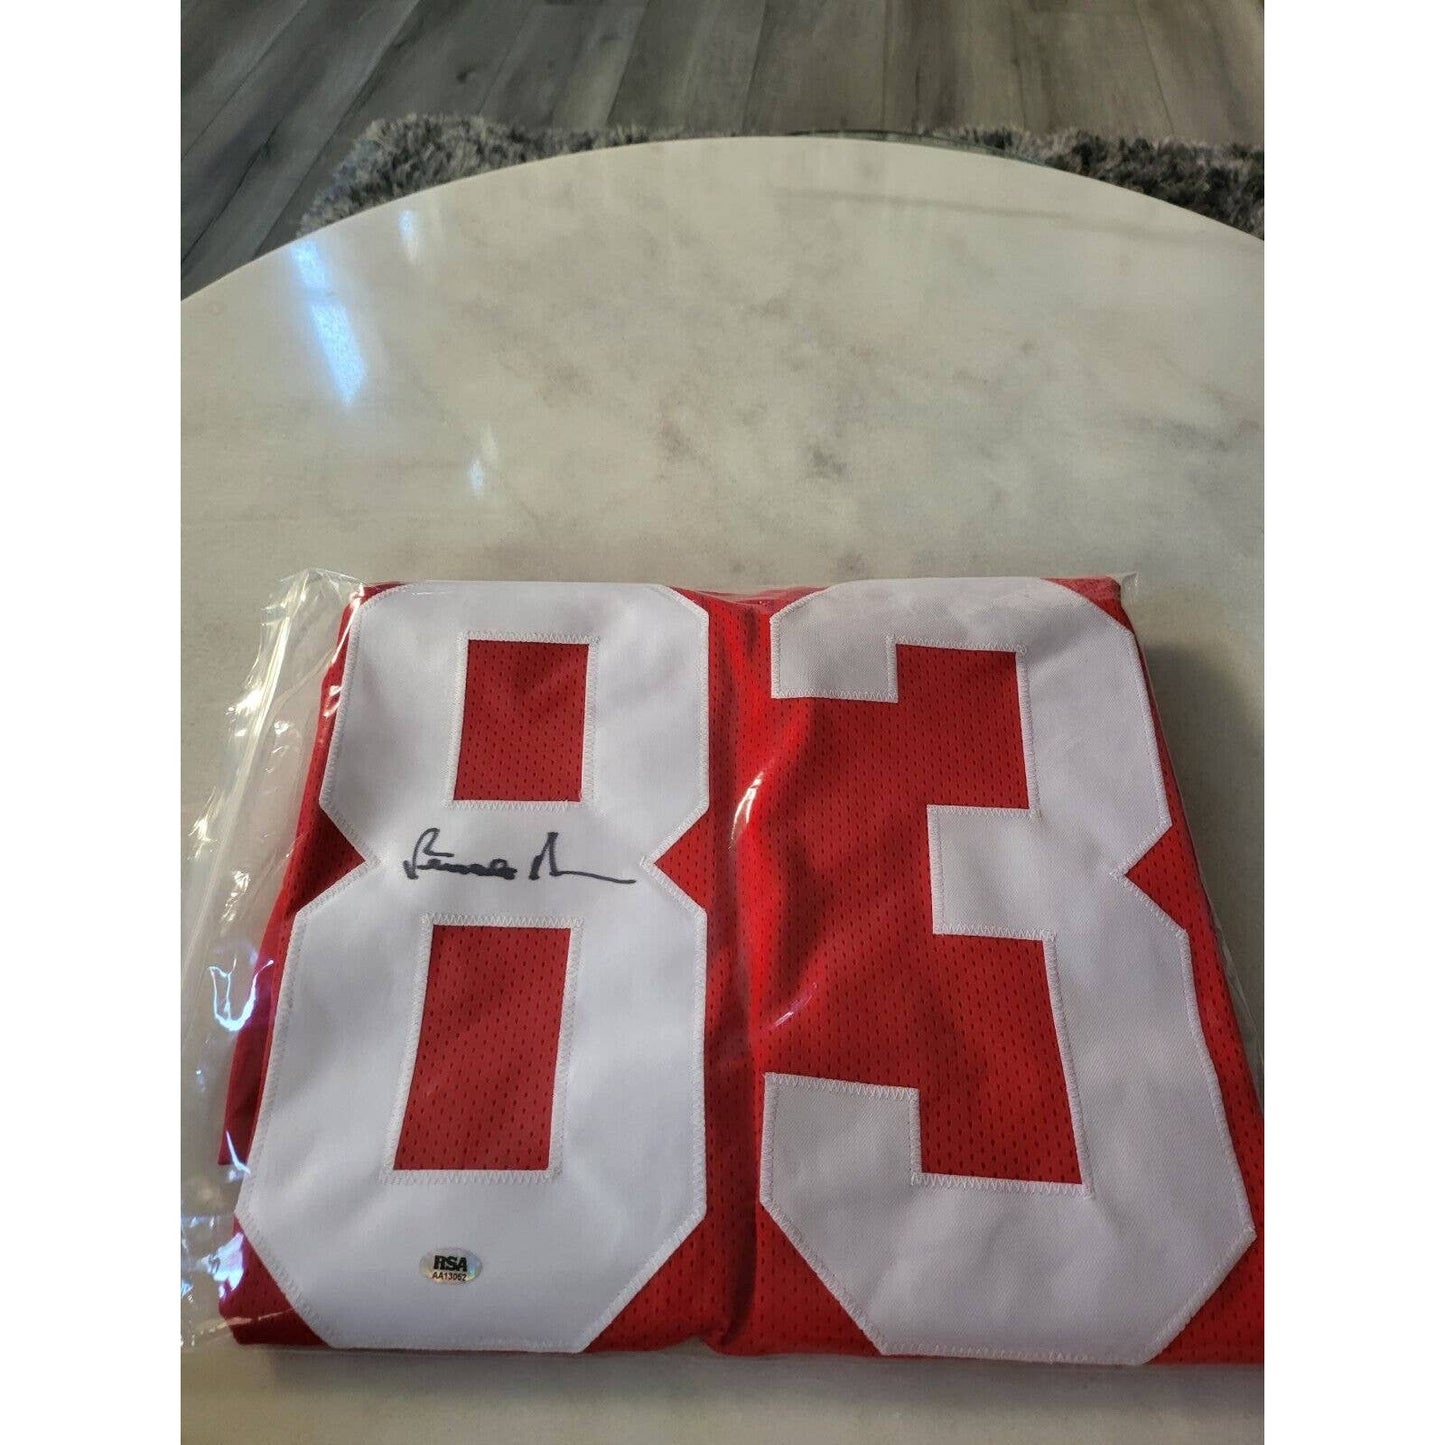 Renaldo Nehemiah Autographed/Signed Jersey San Francisco 49ers - TreasuresEvolved